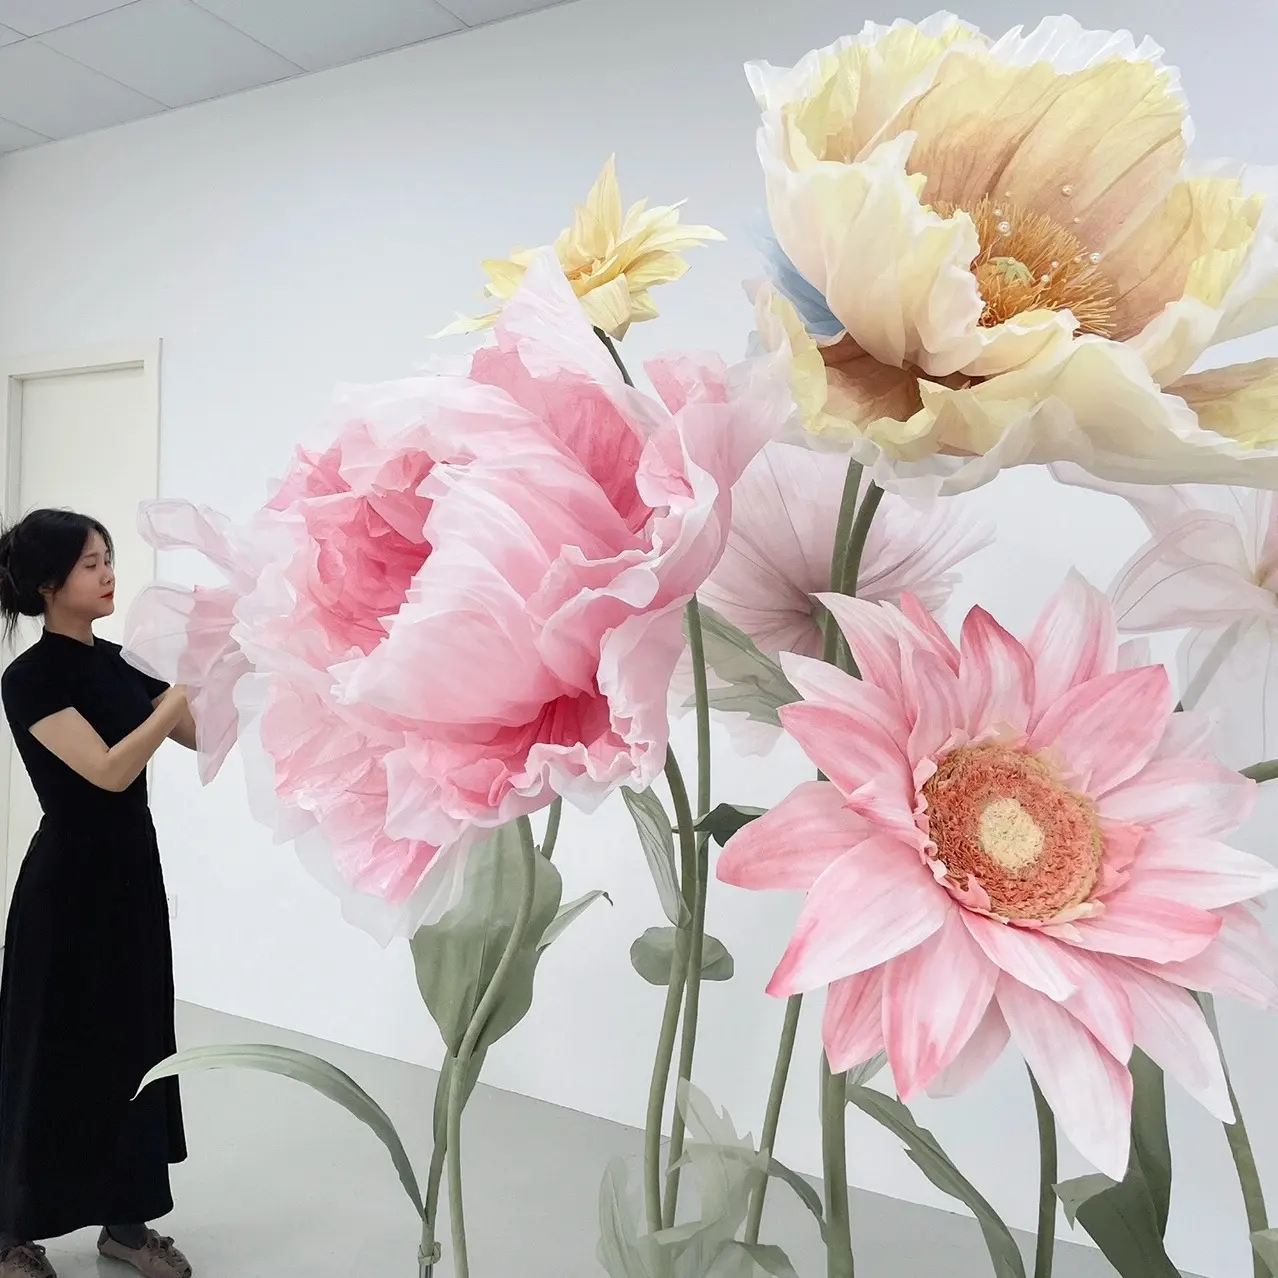 Iant-Arreglo de flores de gran tamaño, flor artificial personalizable, diámetro de 80-120 CM